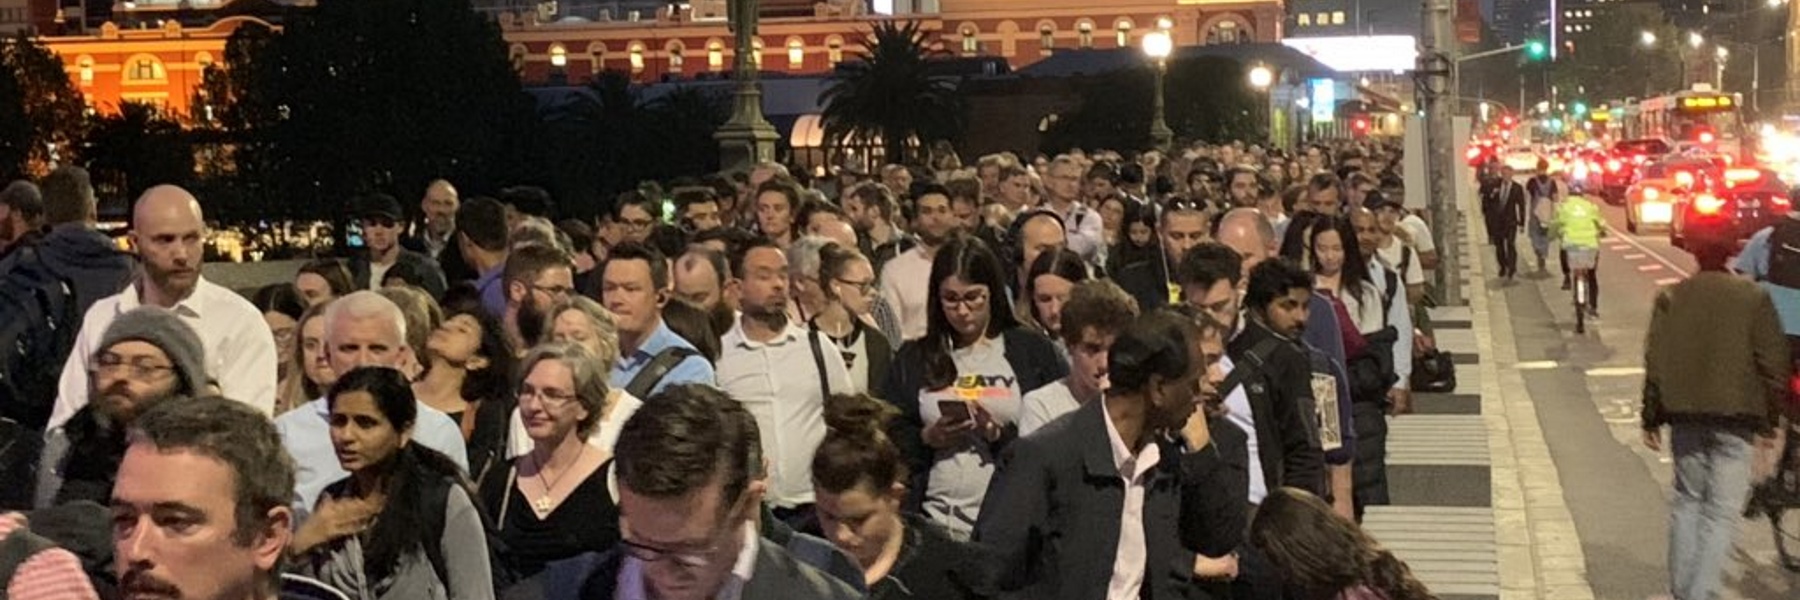 Queue of people on Princes Bridge (Source: James Oaten, ABC)